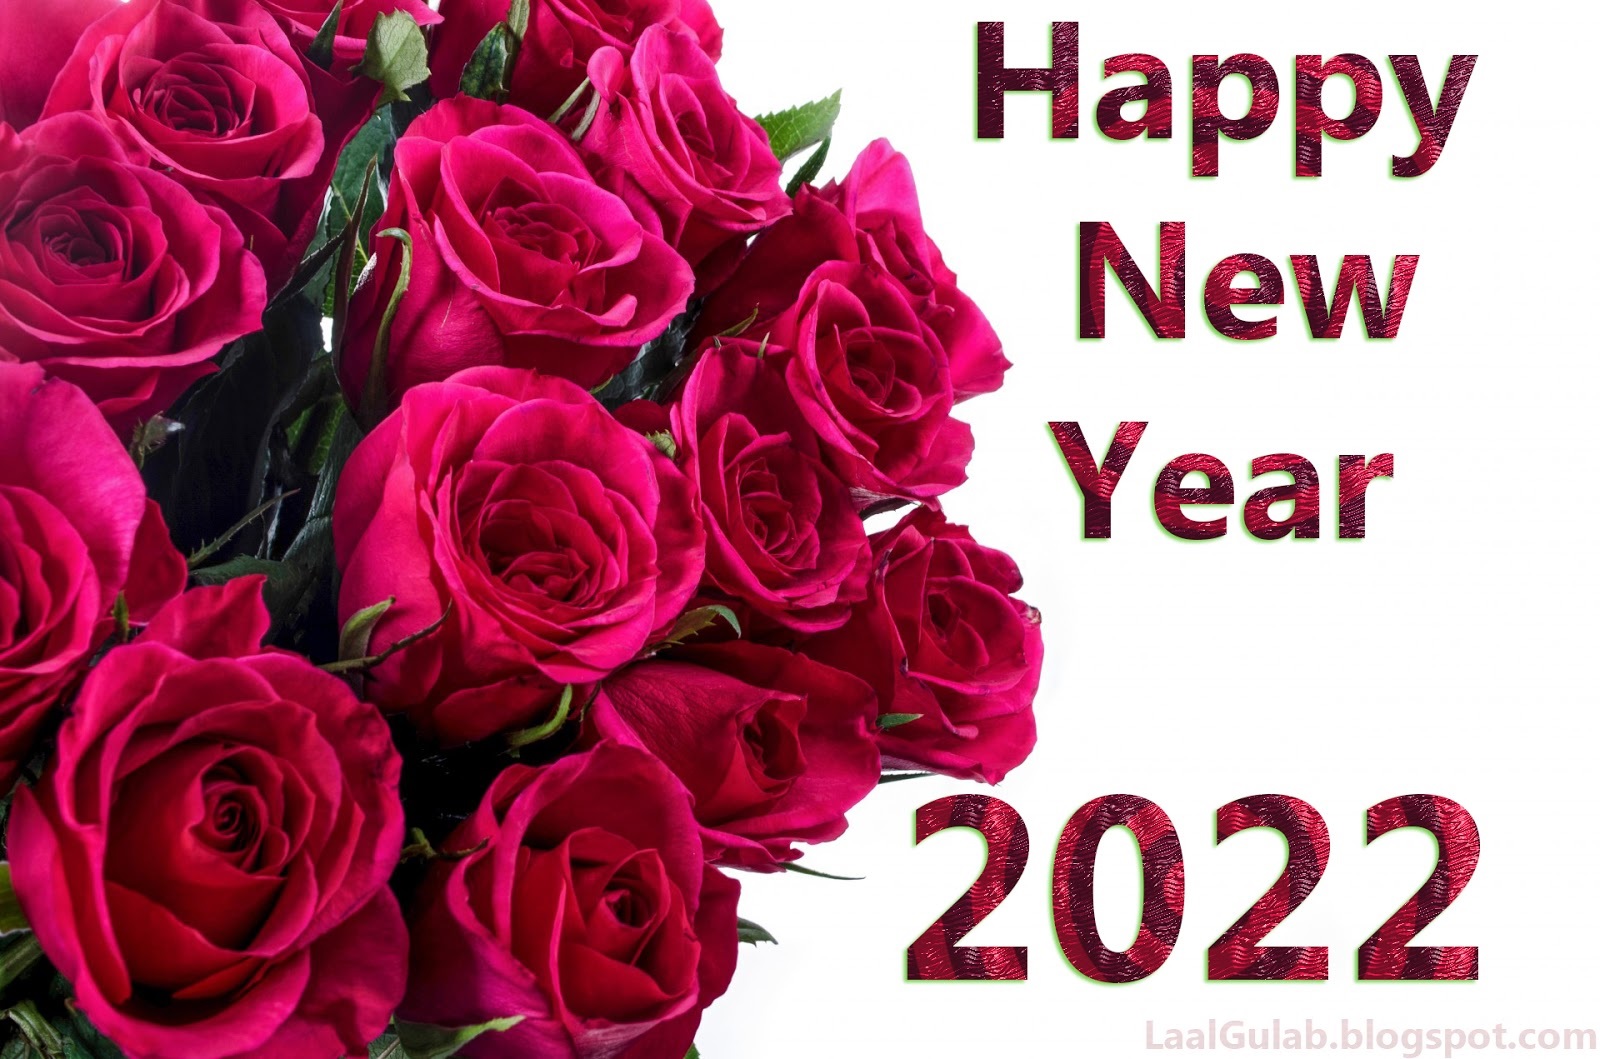 Happy New Year 2022 - 8